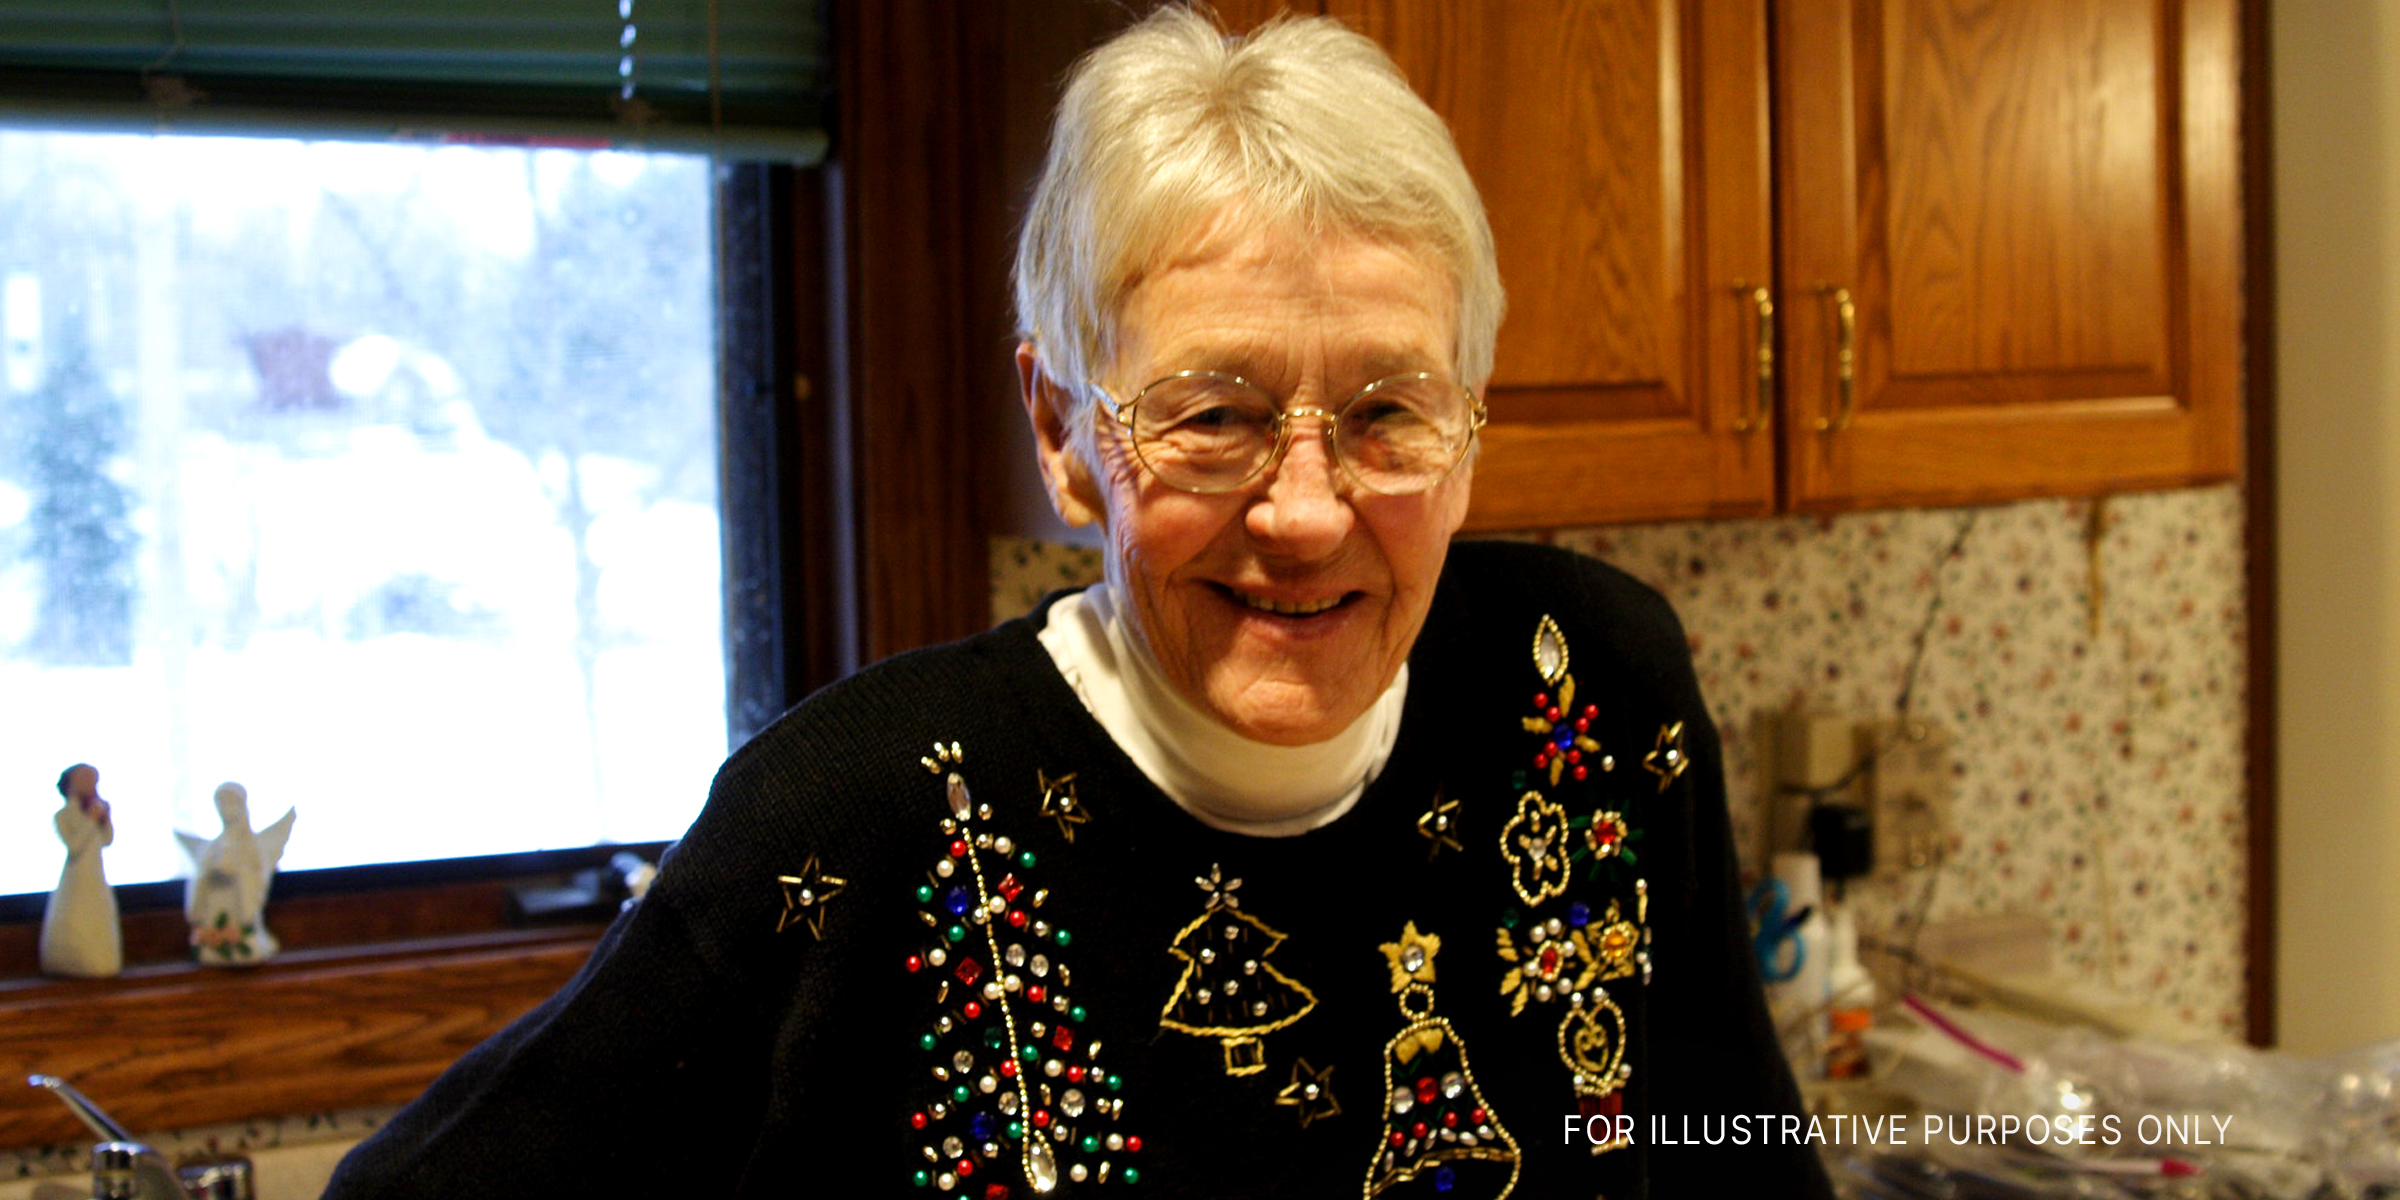 Großmutter lächelt in die Kamera | Quelle: Flickr.com/aaronjacobsъ/CC BY-SA 2.0